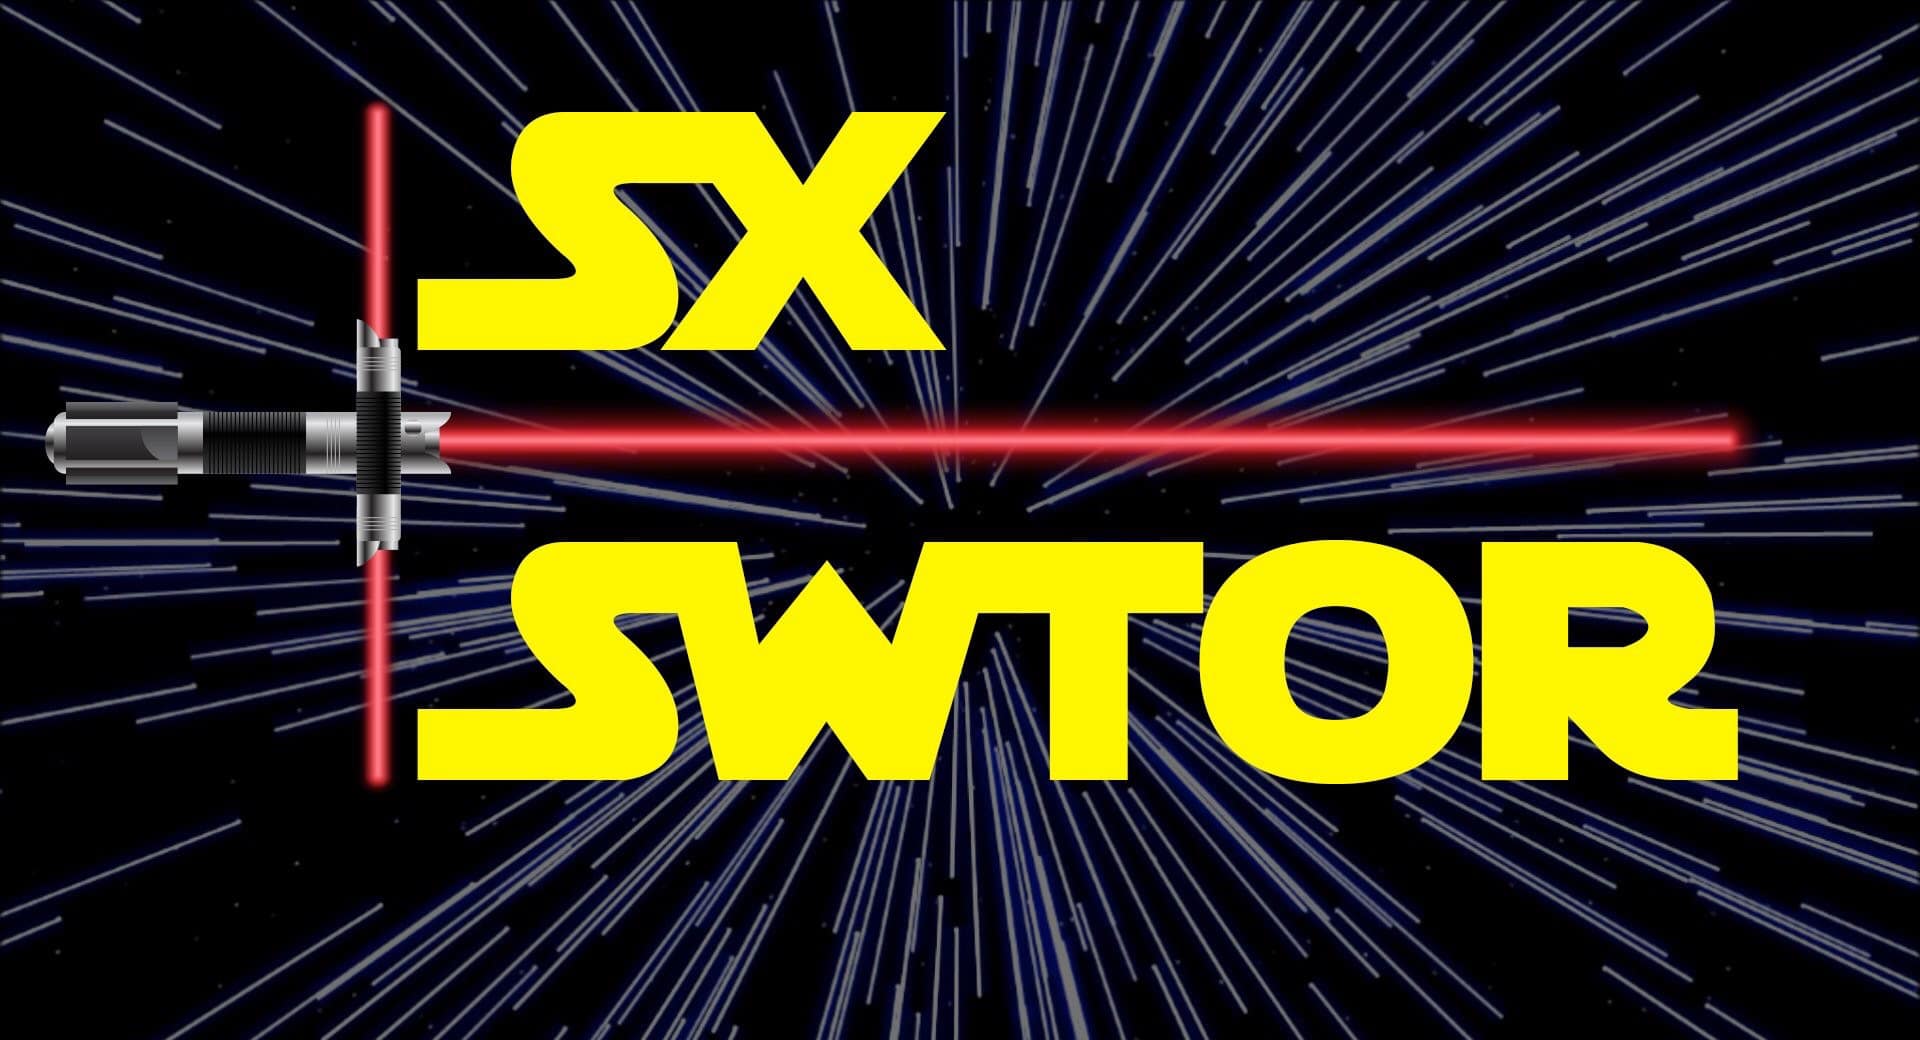 SX SWTOR – The Mini Community Cantina